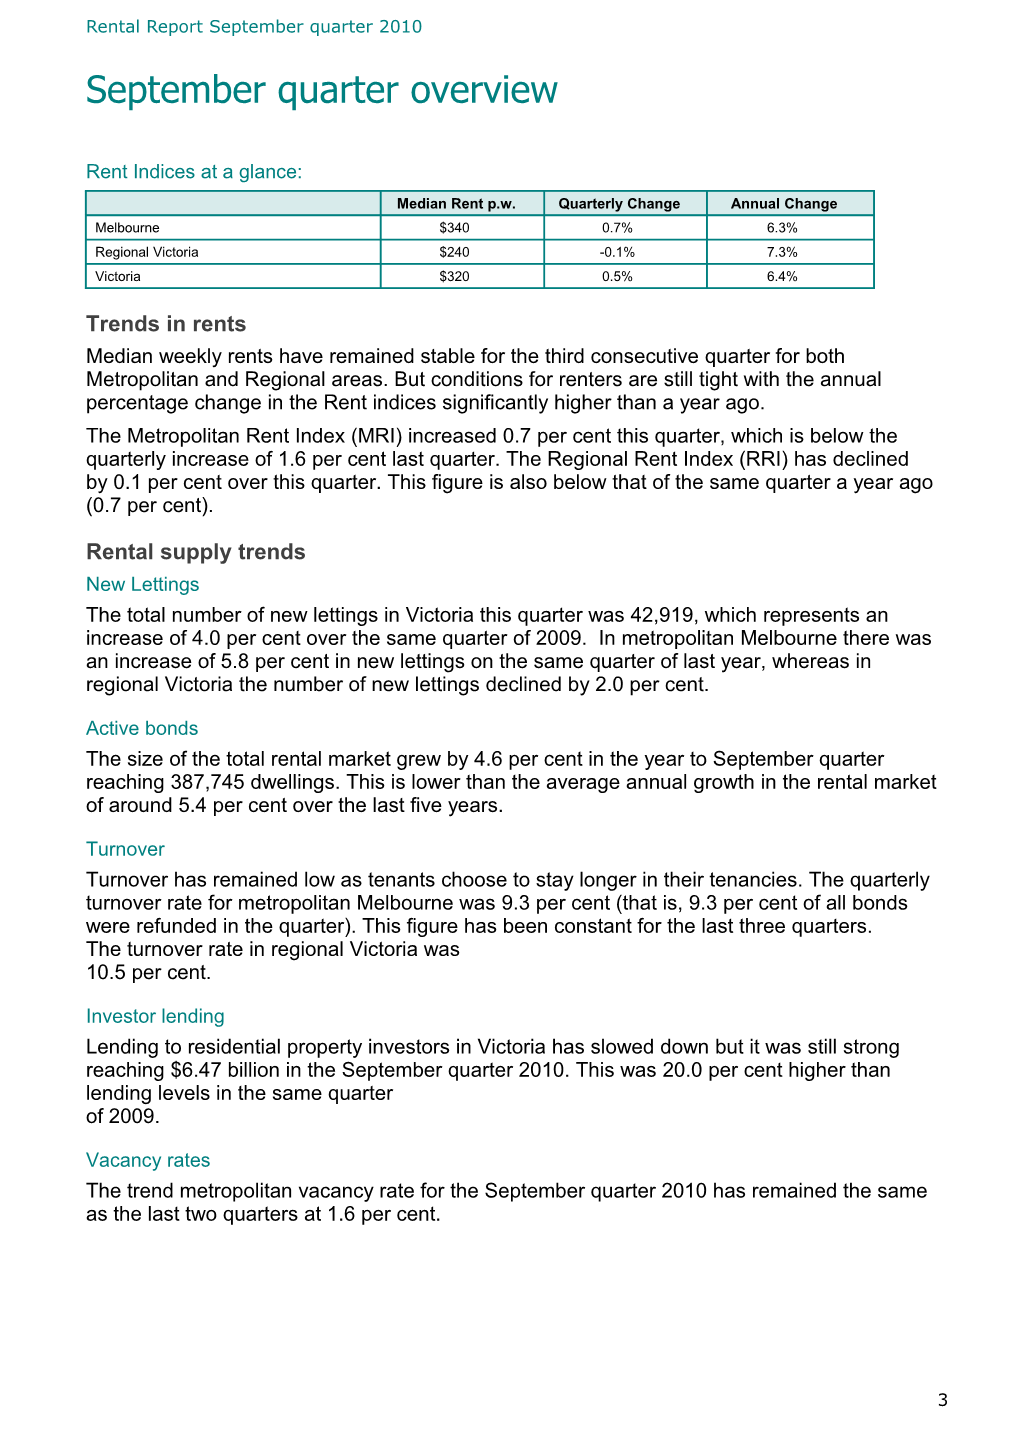 Rental Report September Quarter 2010 (Word Size 1.63 MB, Pages 28)